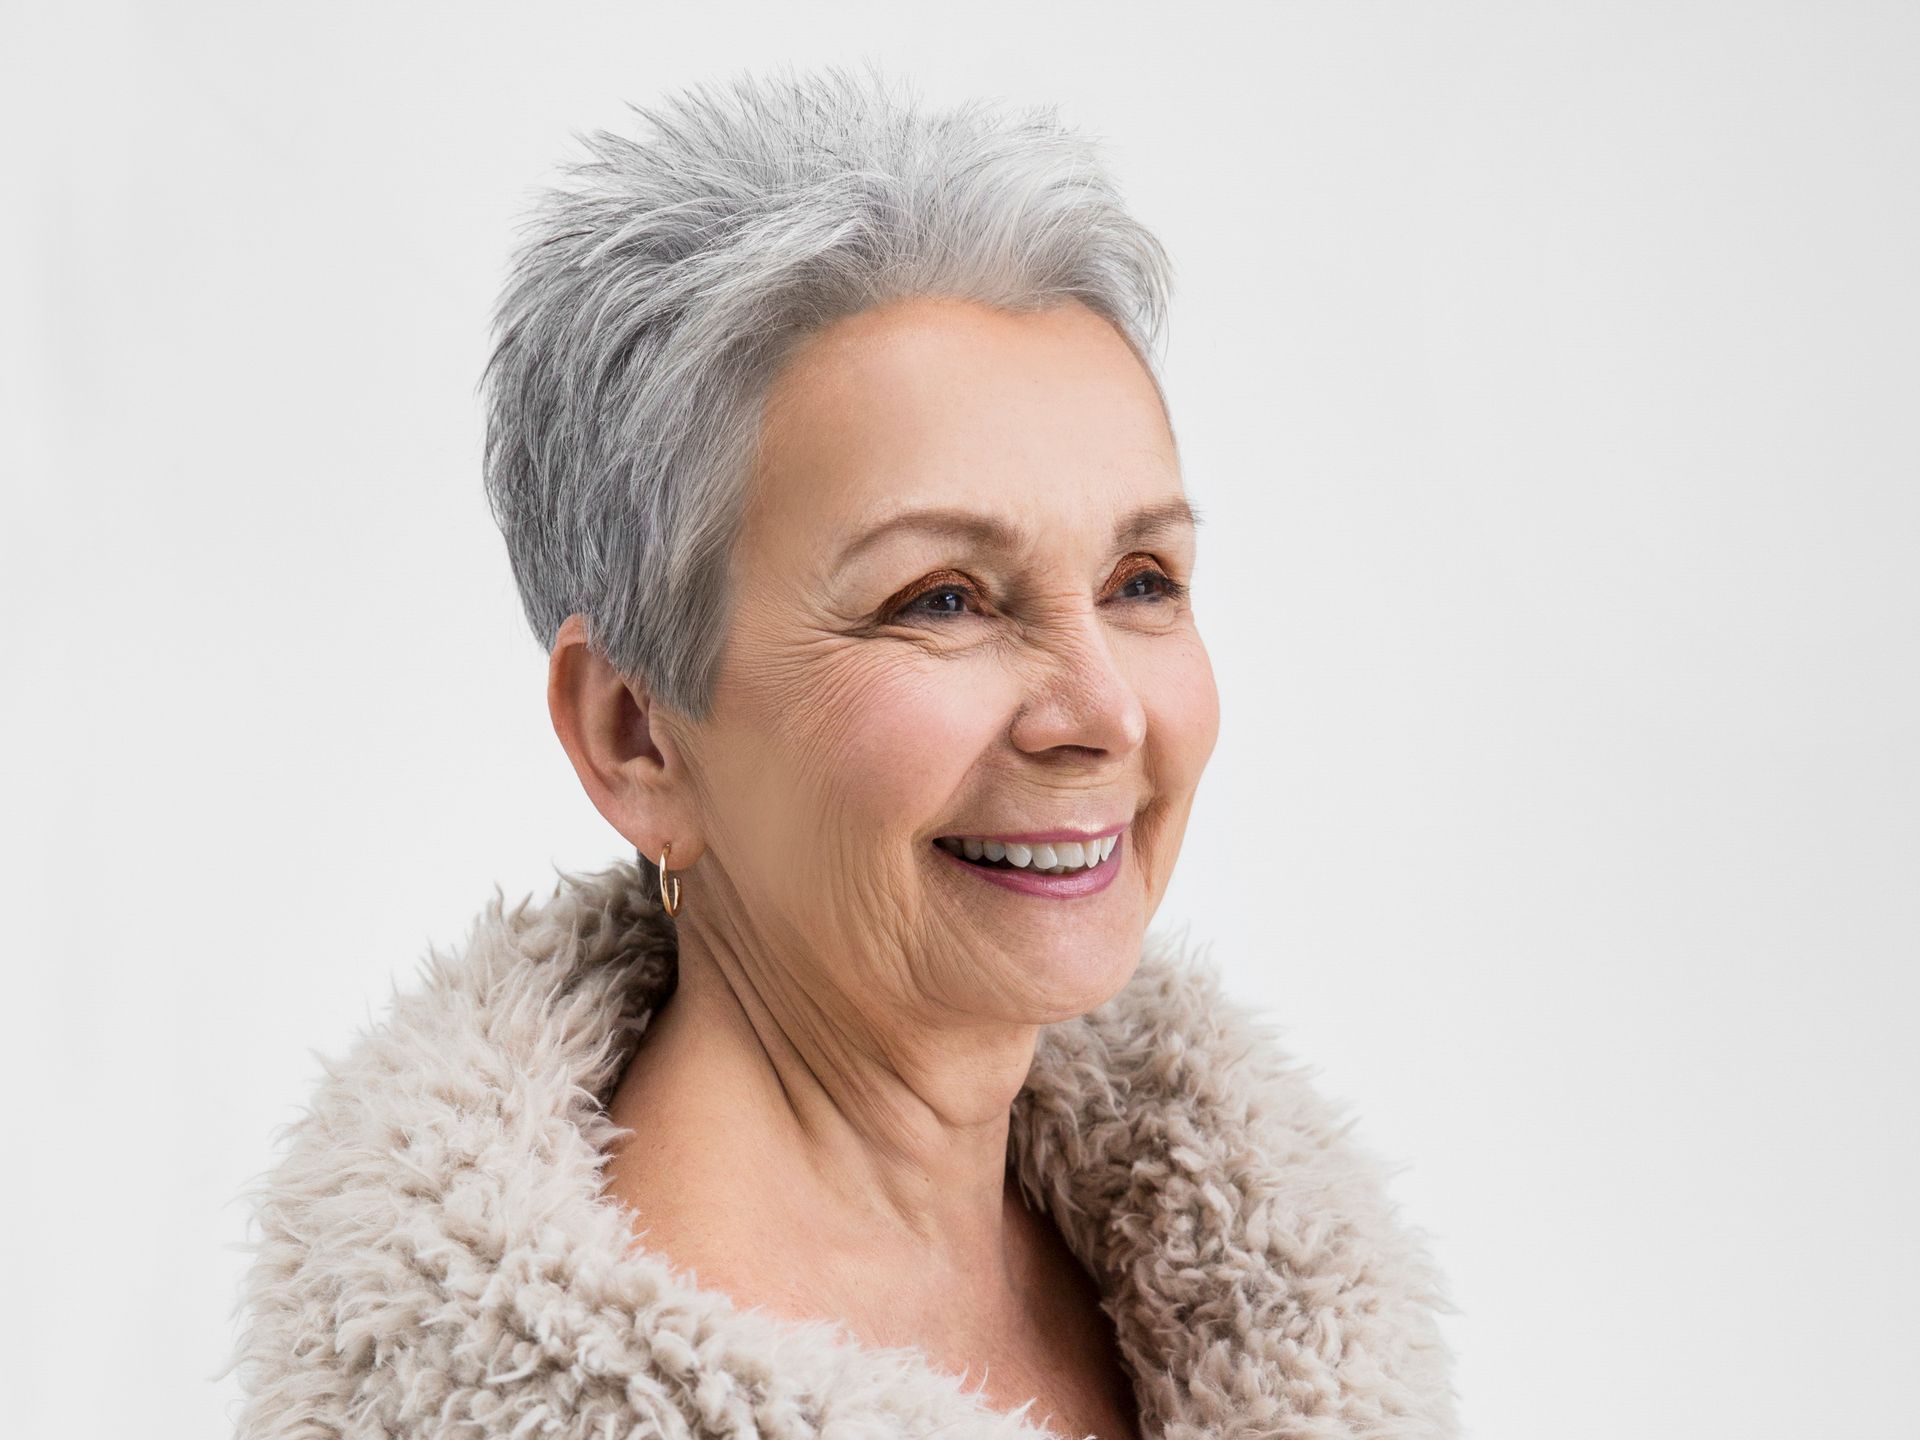 elder lady with grey hair smiling